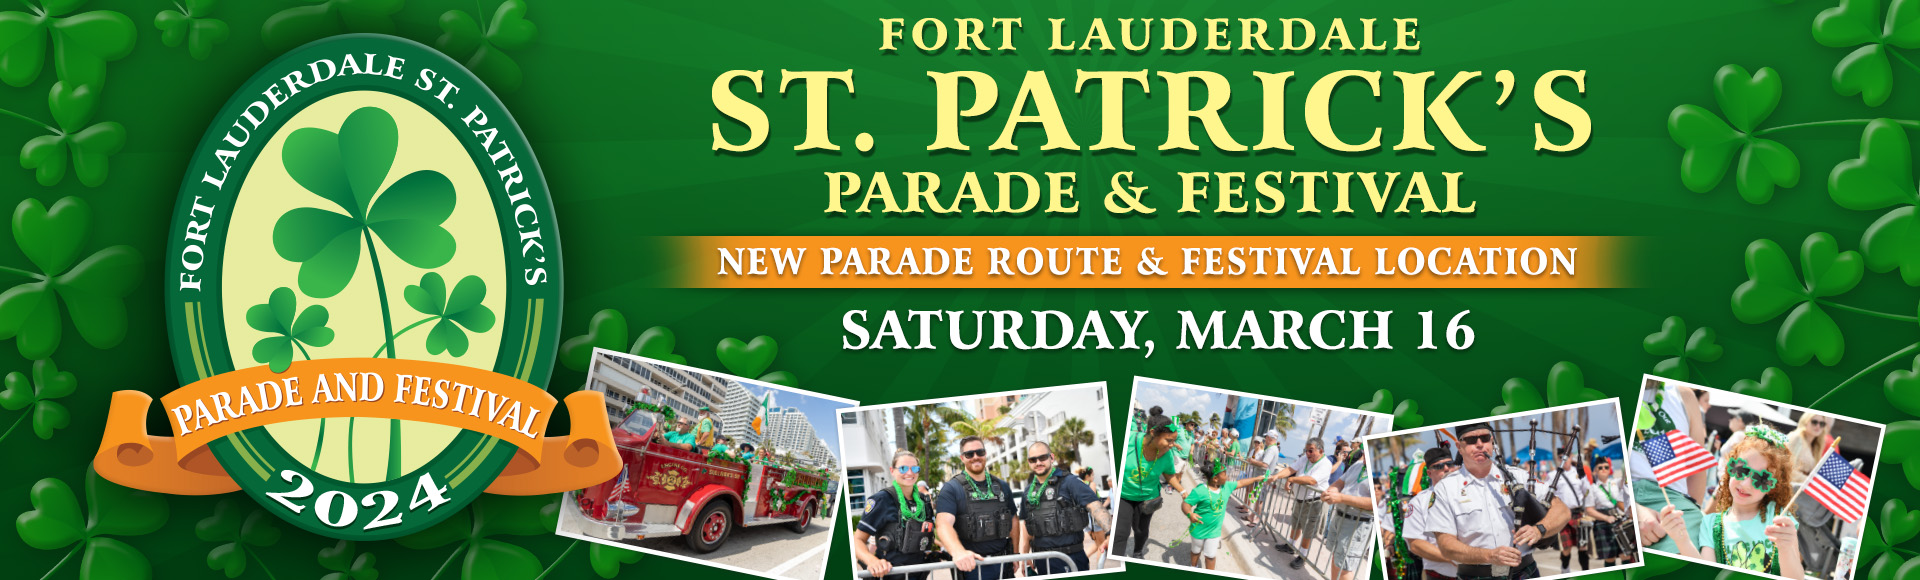 St Patrick's Parade & Festival March 16